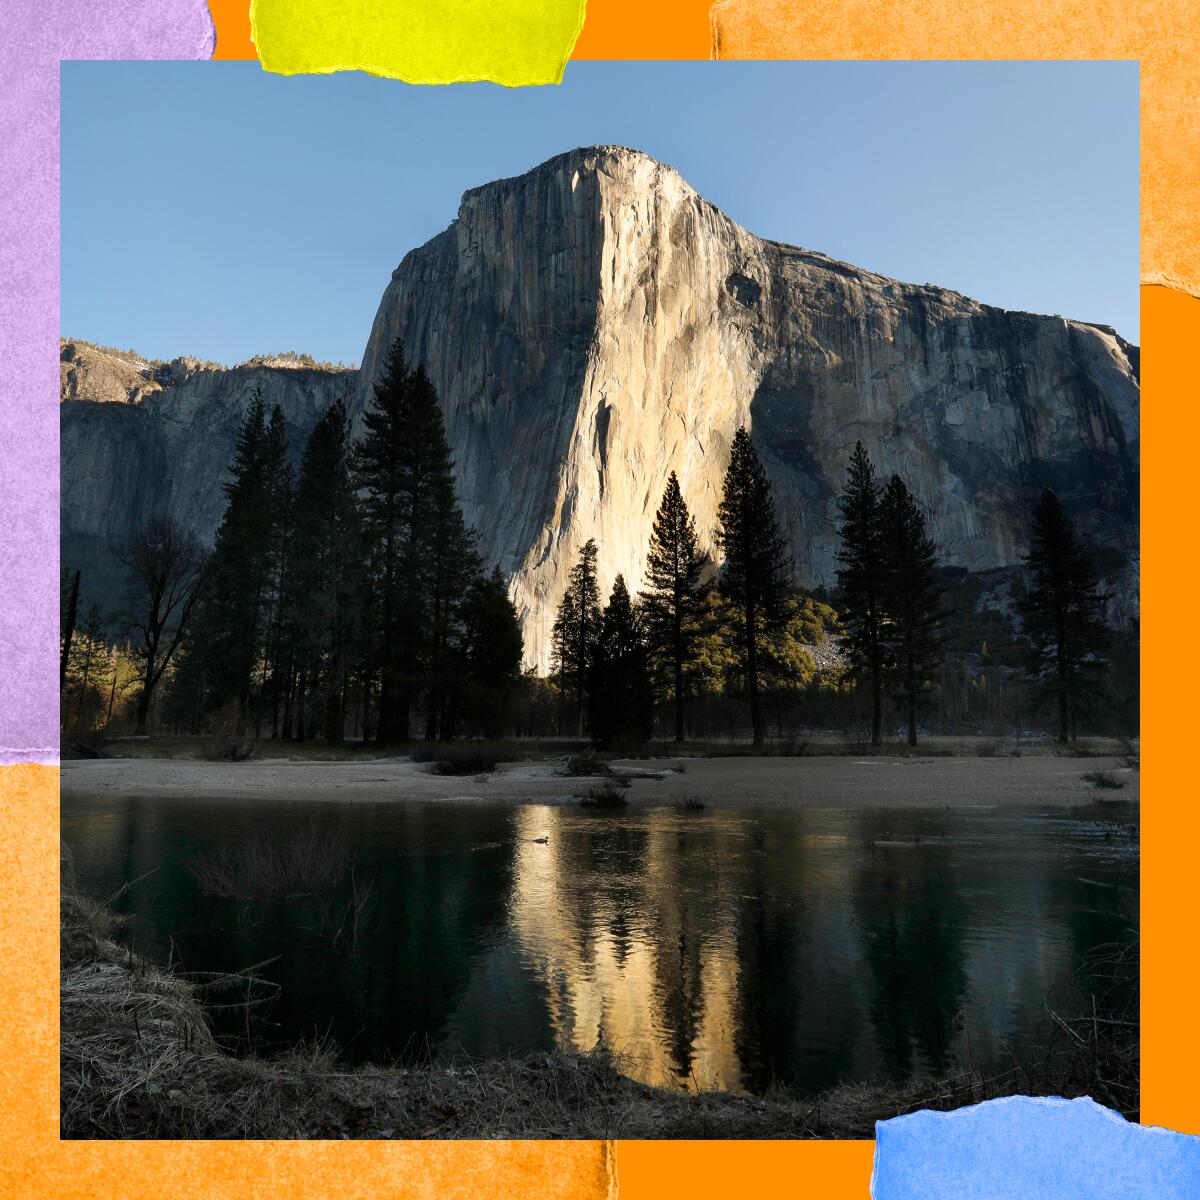 Yosemite’s El Capitan is a challenging and popular climbing destination